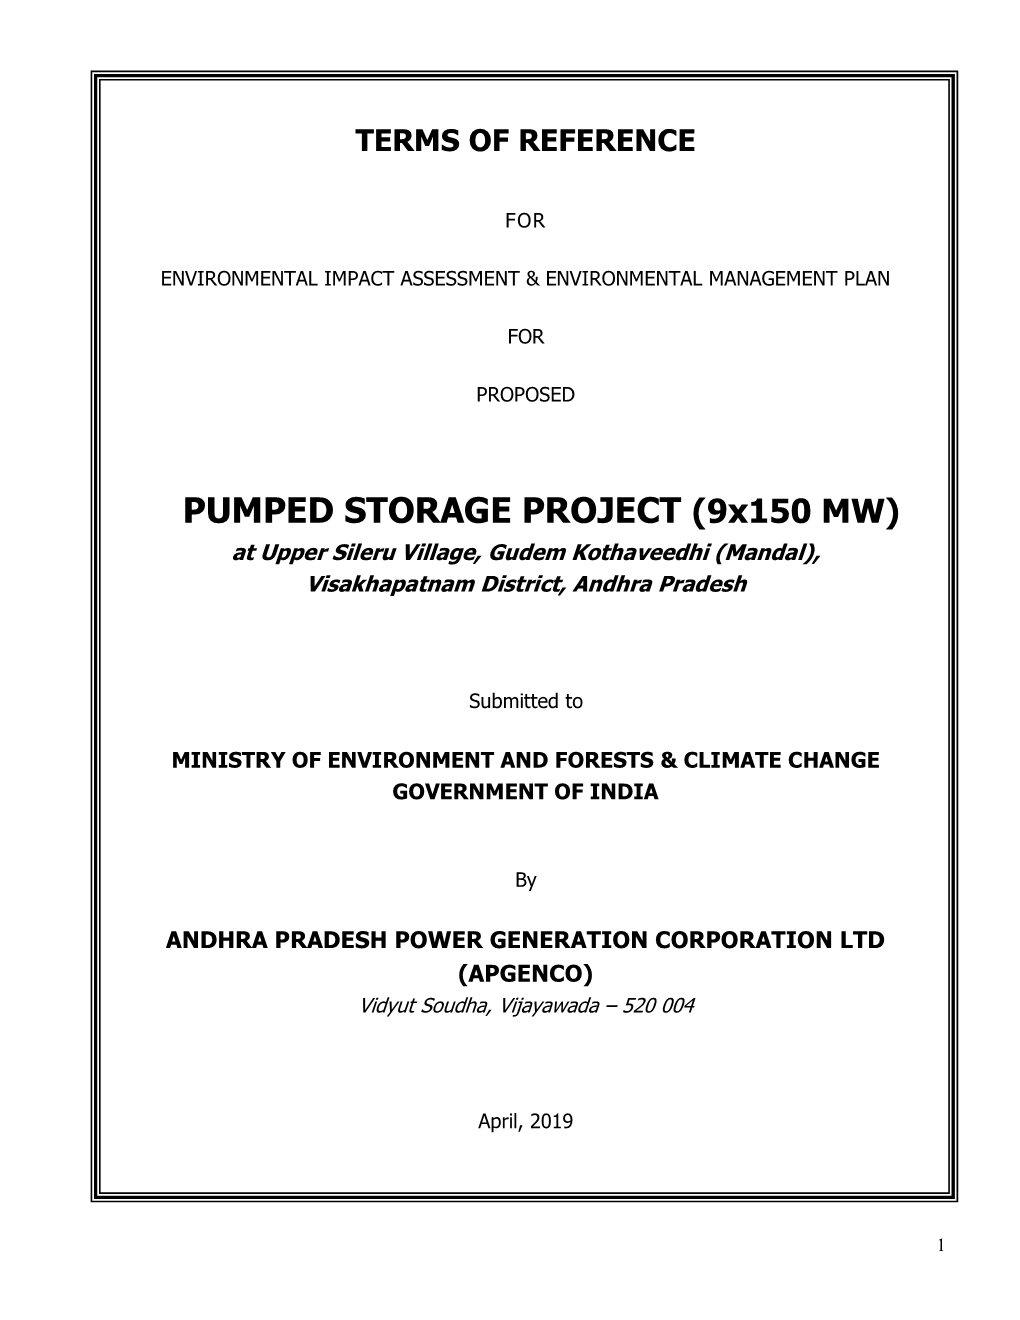 PUMPED STORAGE PROJECT (9X150 MW) at Upper Sileru Village, Gudem Kothaveedhi (Mandal), Visakhapatnam District, Andhra Pradesh